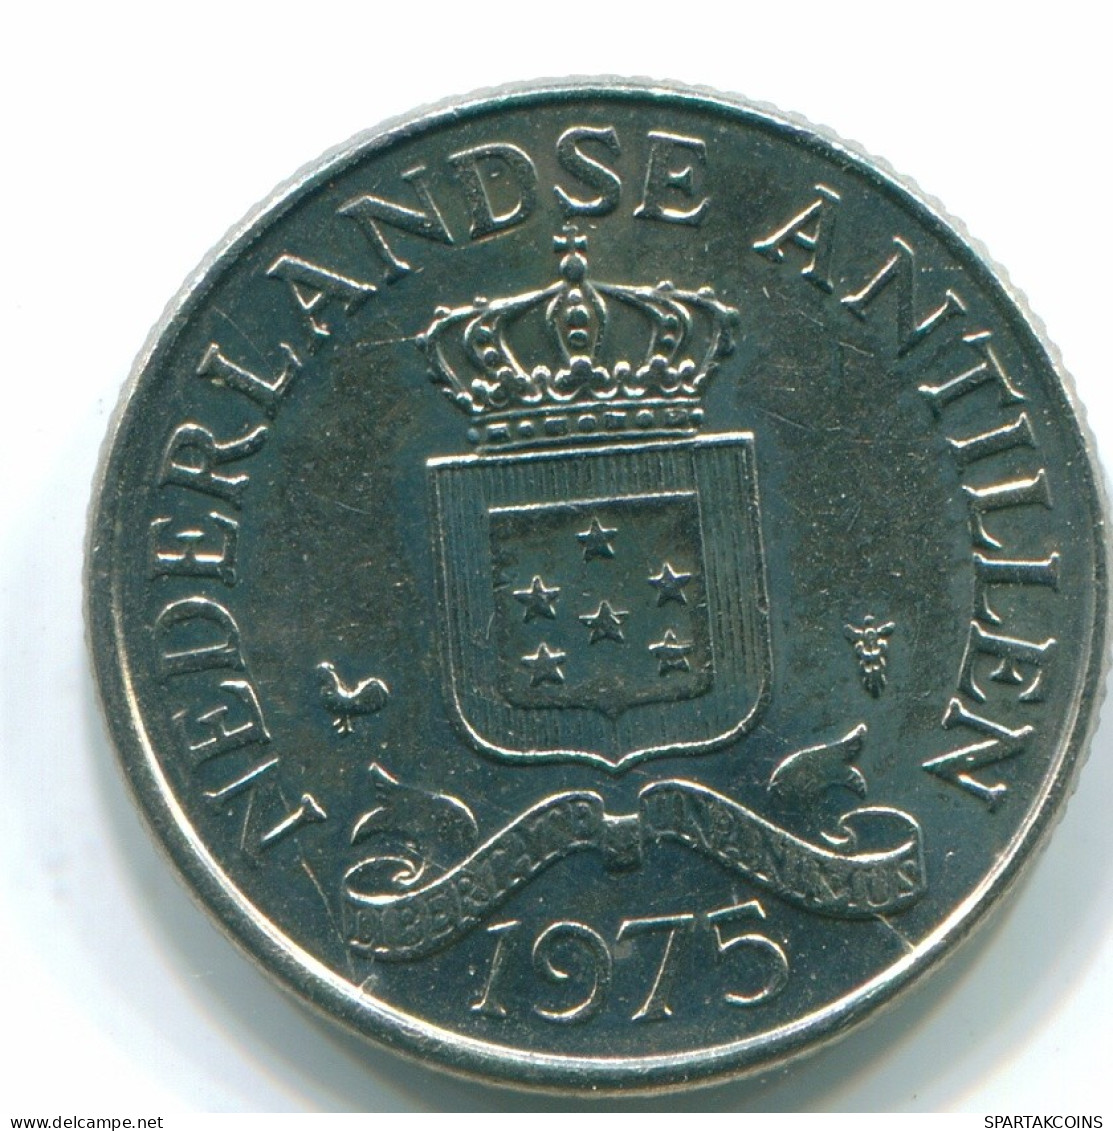 25 CENTS 1975 NIEDERLÄNDISCHE ANTILLEN Nickel Koloniale Münze #S11610.D.A - Netherlands Antilles